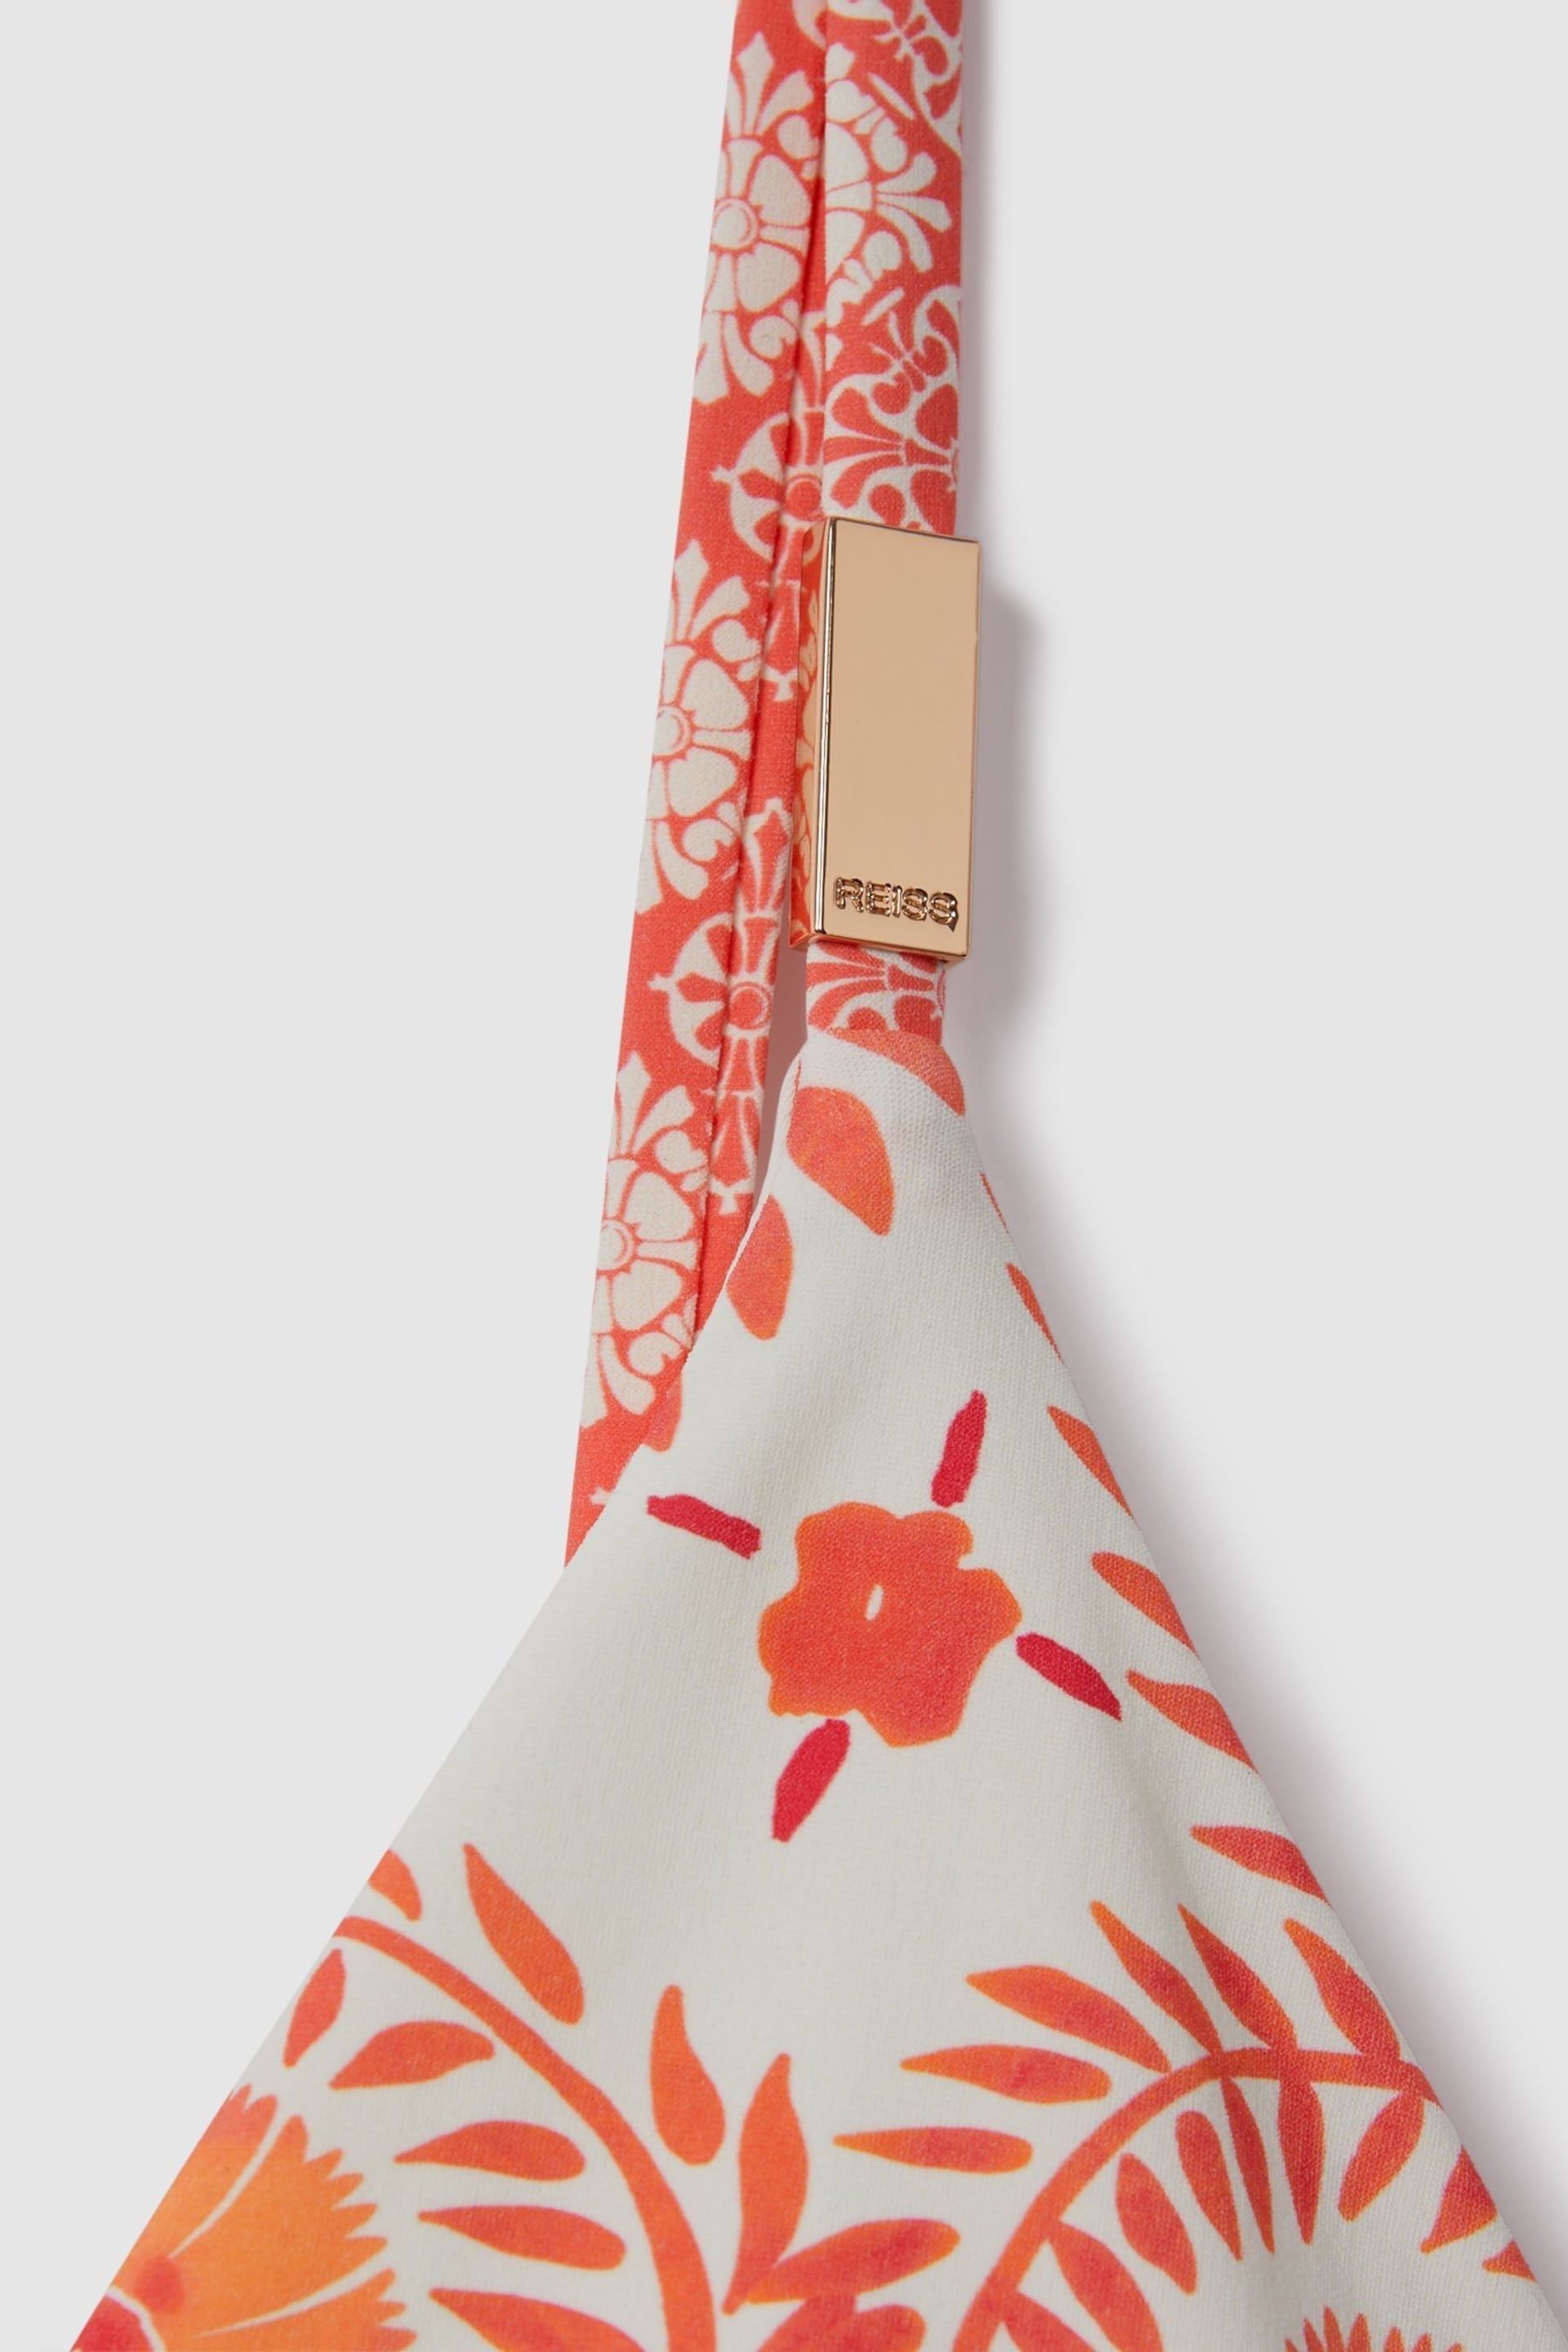 Reiss Cream/Coral Kallie Printed Tie Back Bikini Top - Image 5 of 5